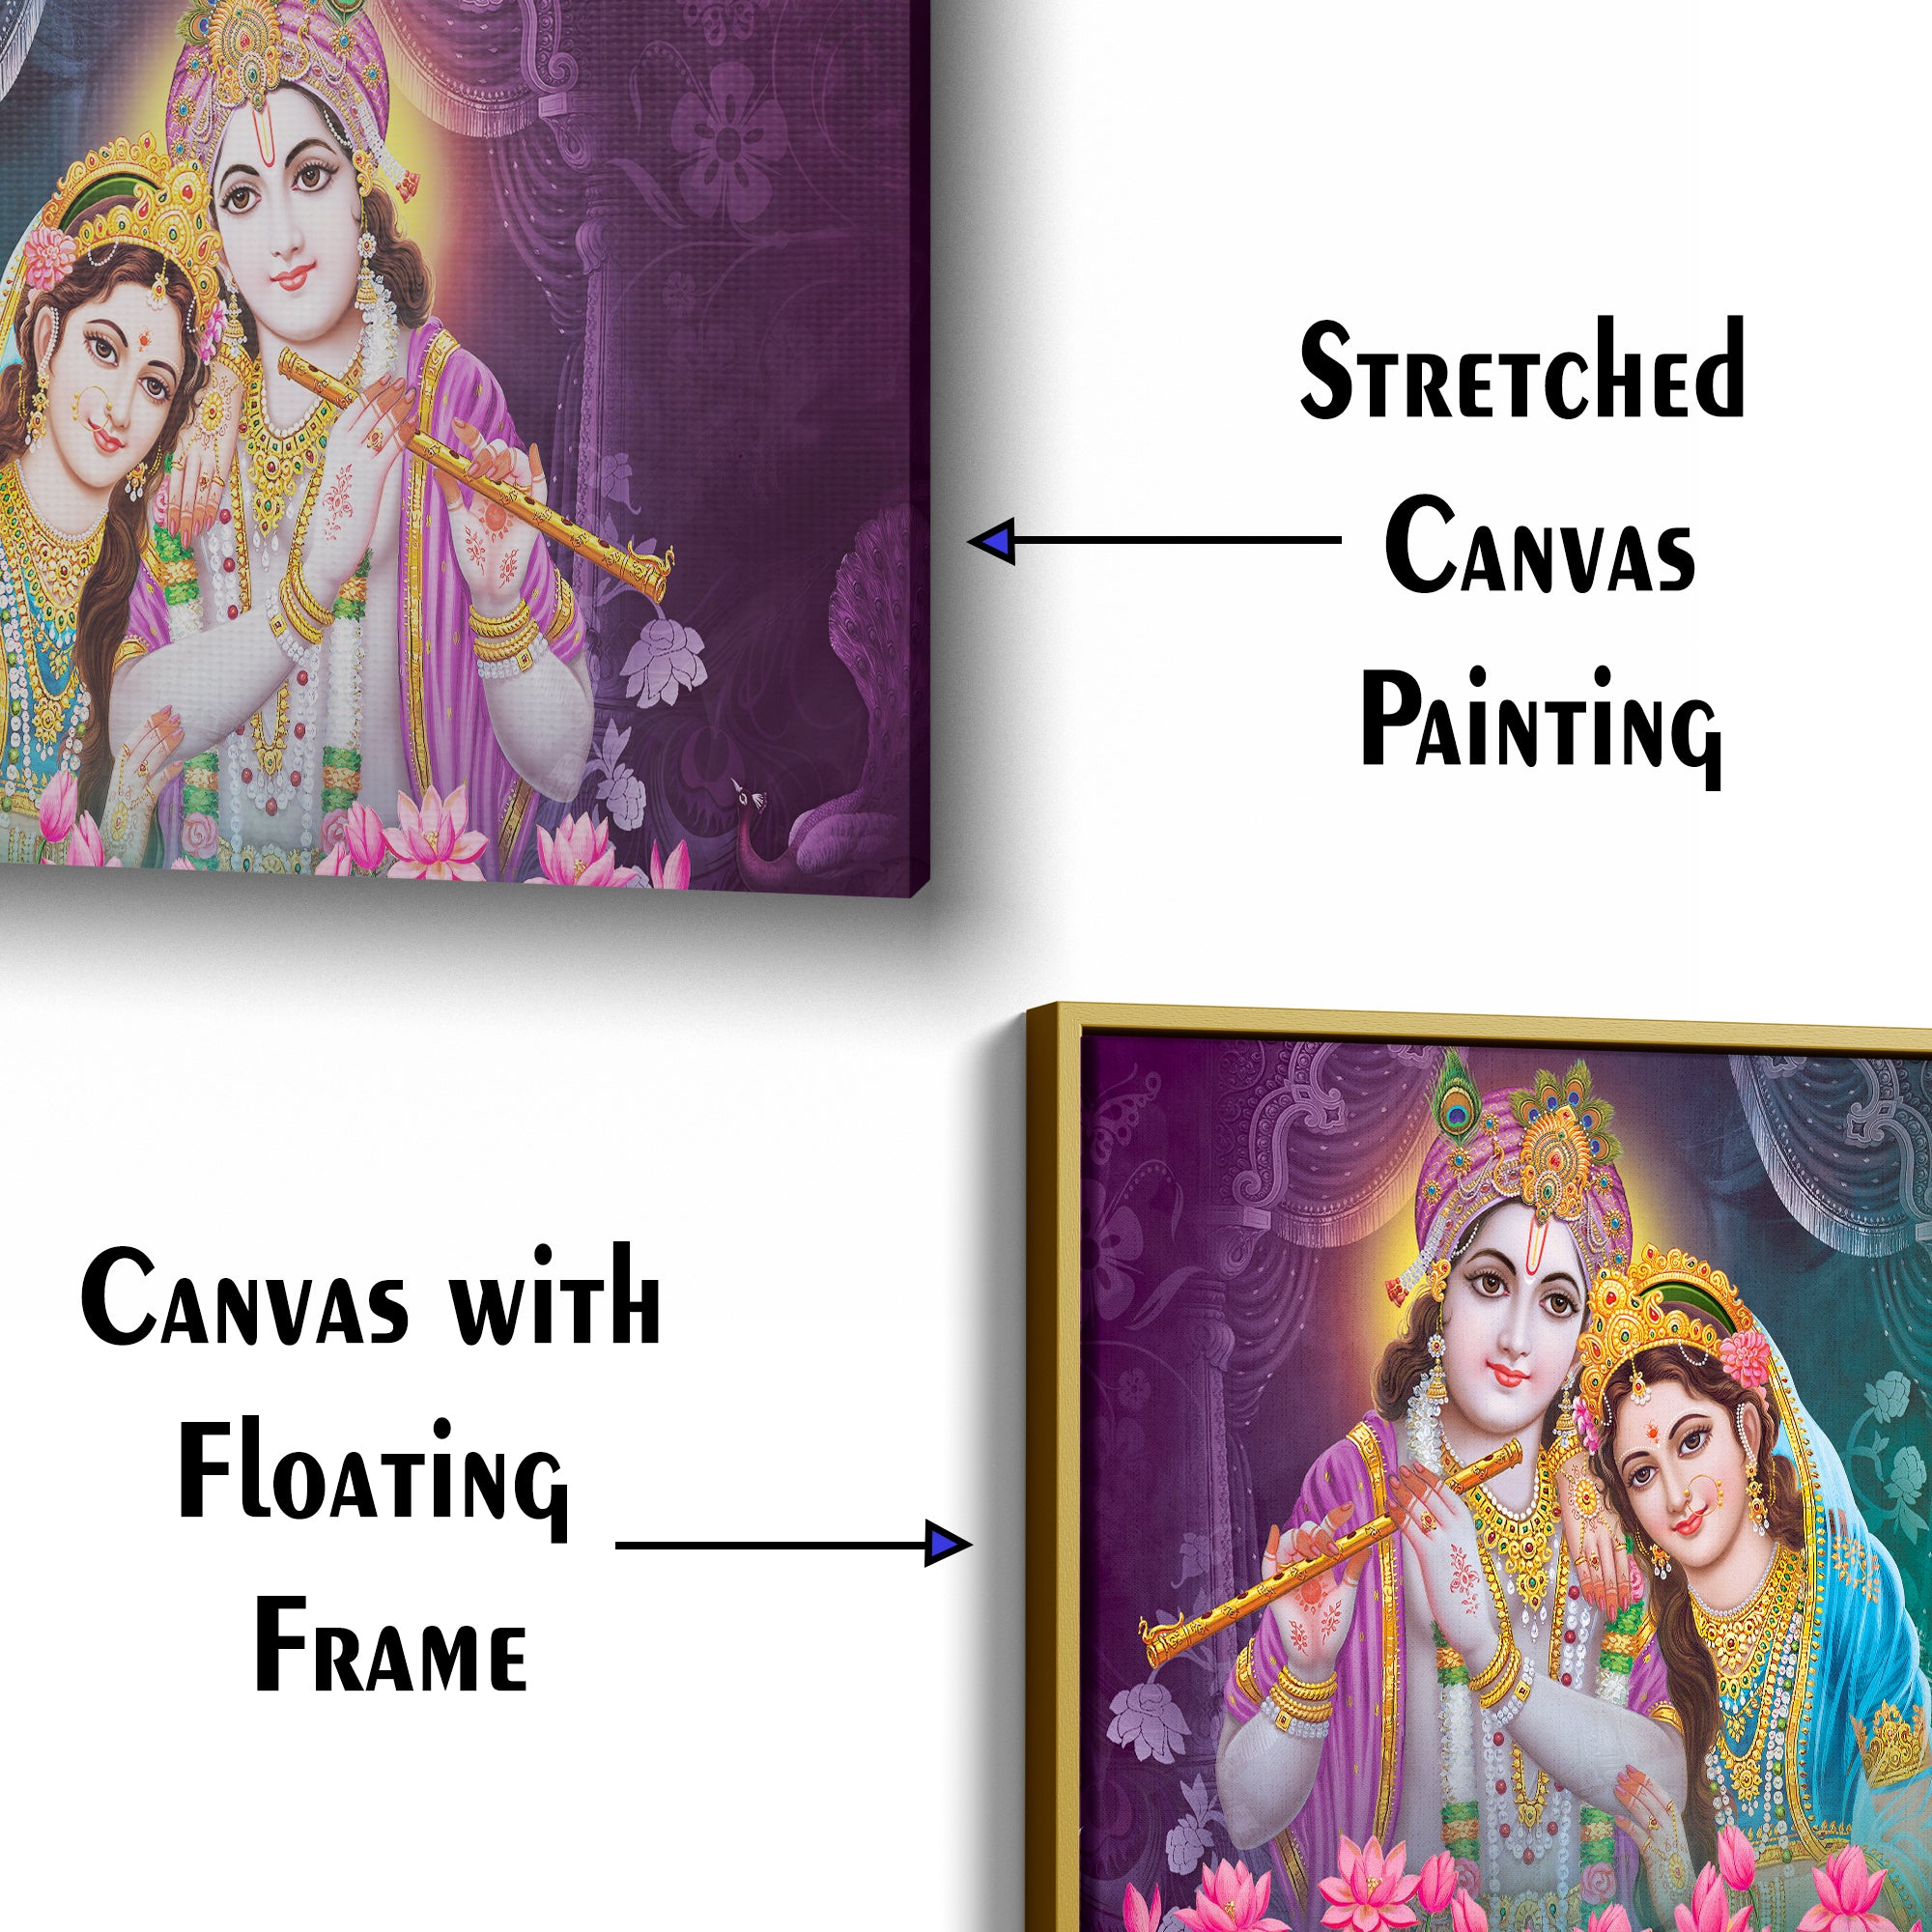 Lord Radha Krishna Beautiful Canvas Wall Painting